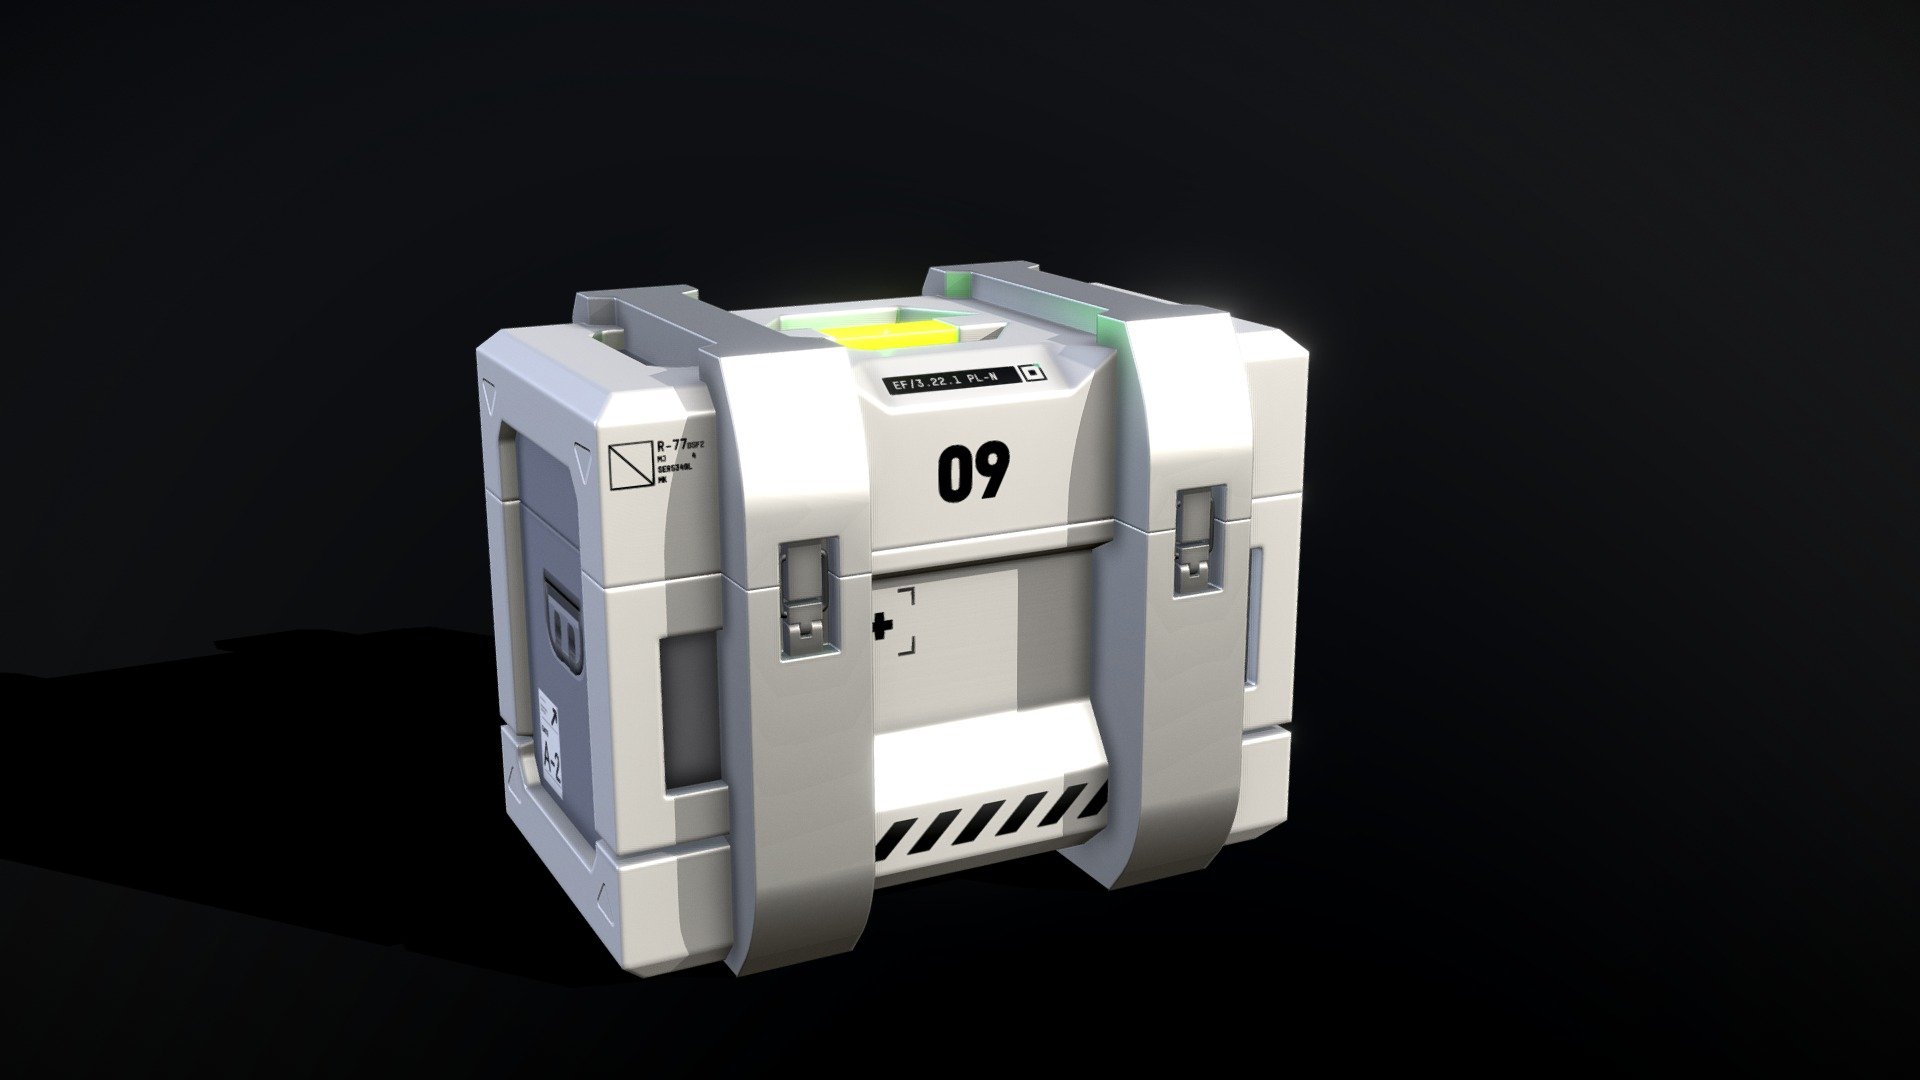 Sci-Fi ammunition box
Concept by pengzhen zhang (https://www.artstation.com/artwork/kG43n) - Sci-Fi crate / ammunition box (1) - Download Free 3D model by ul1tka 3d model